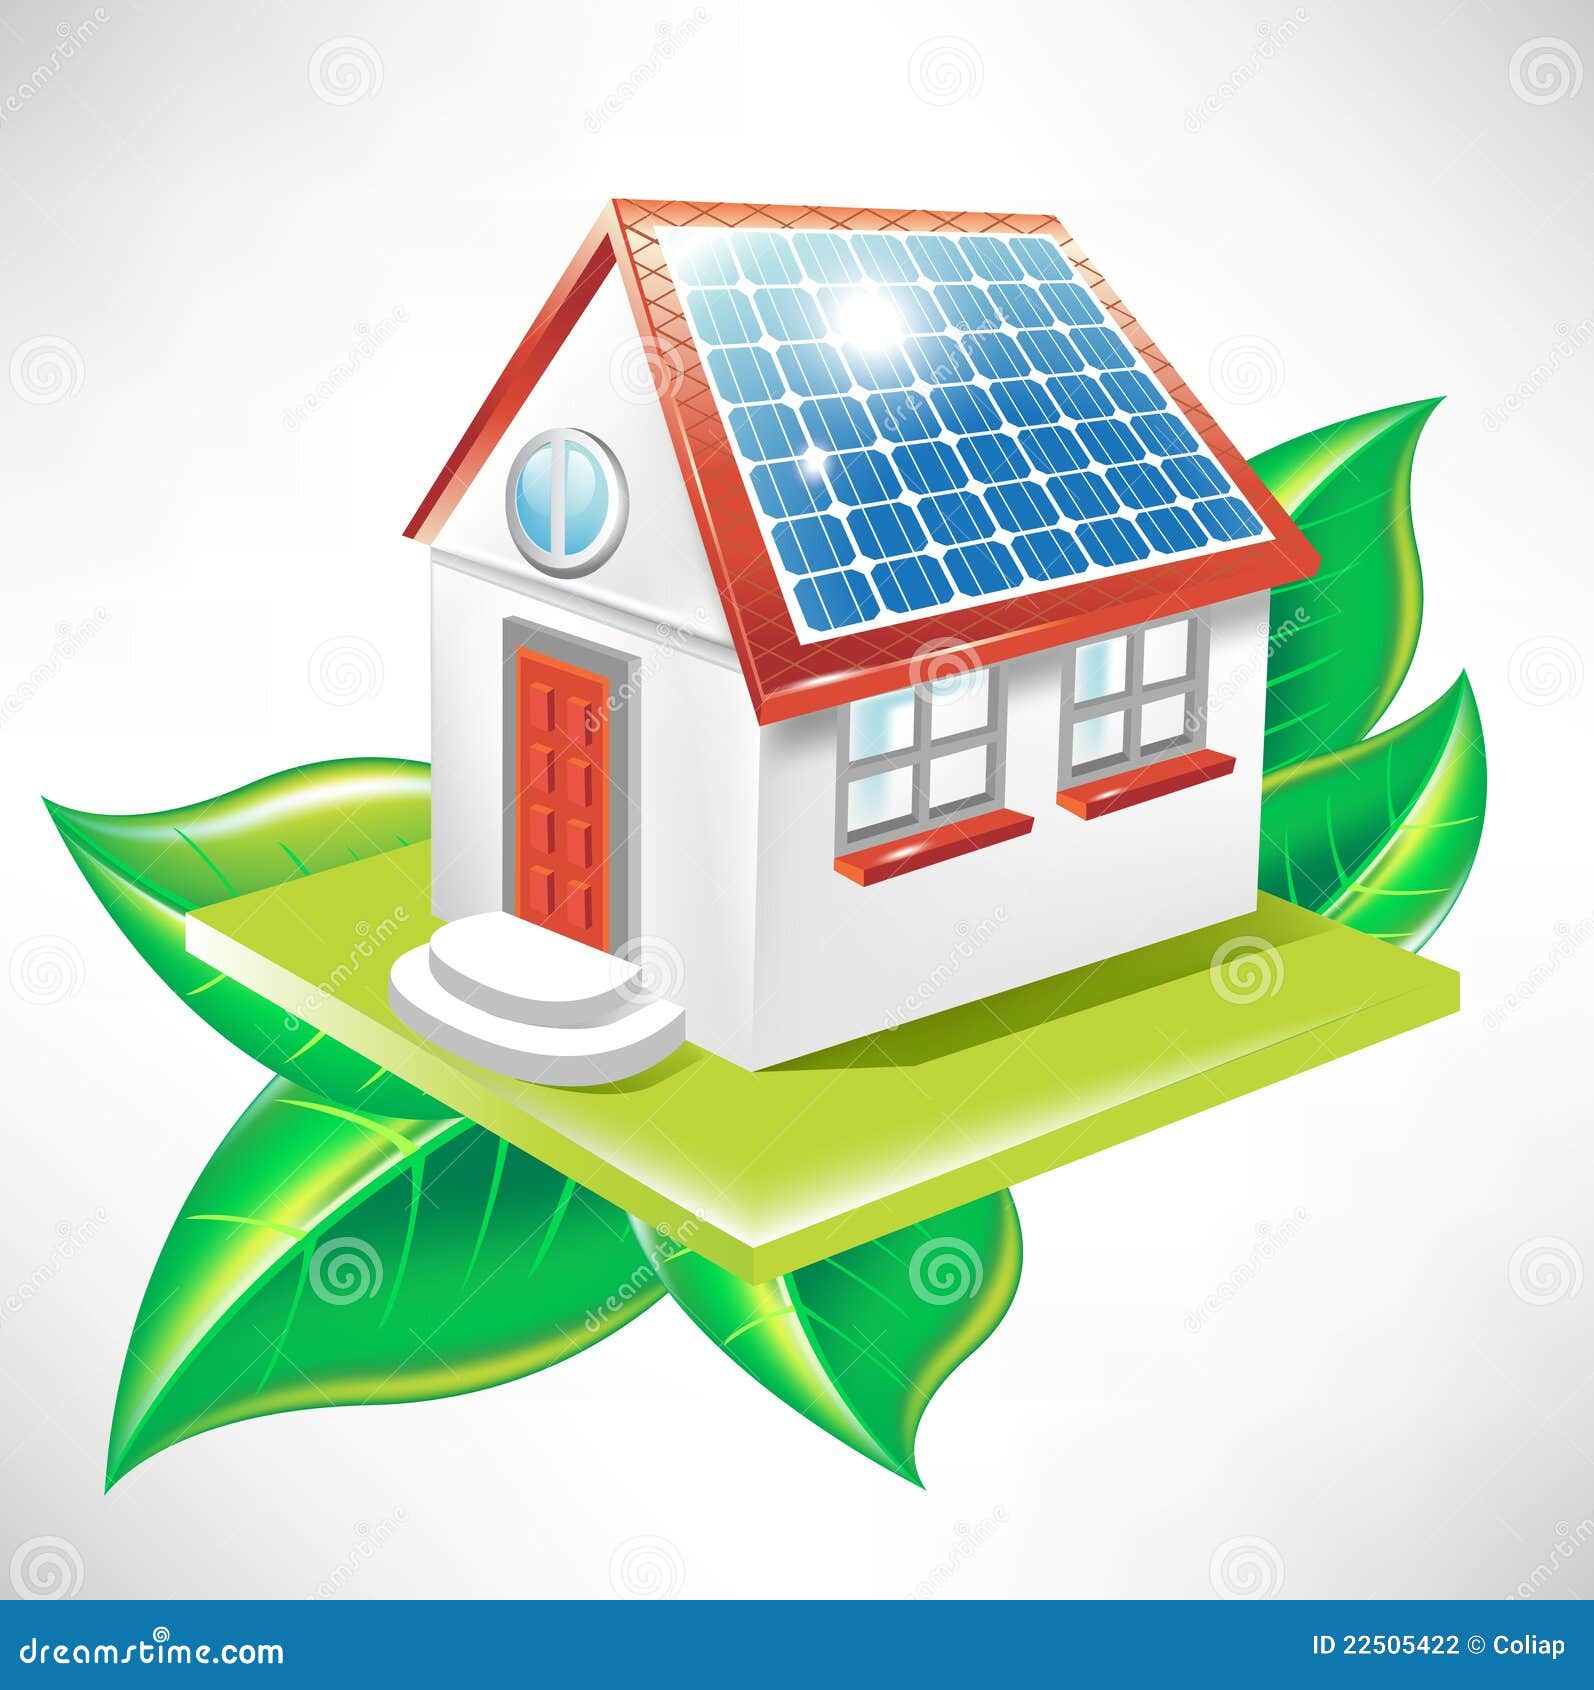 House With Solar Panel; Alternative Energy Icon Stock Photography 